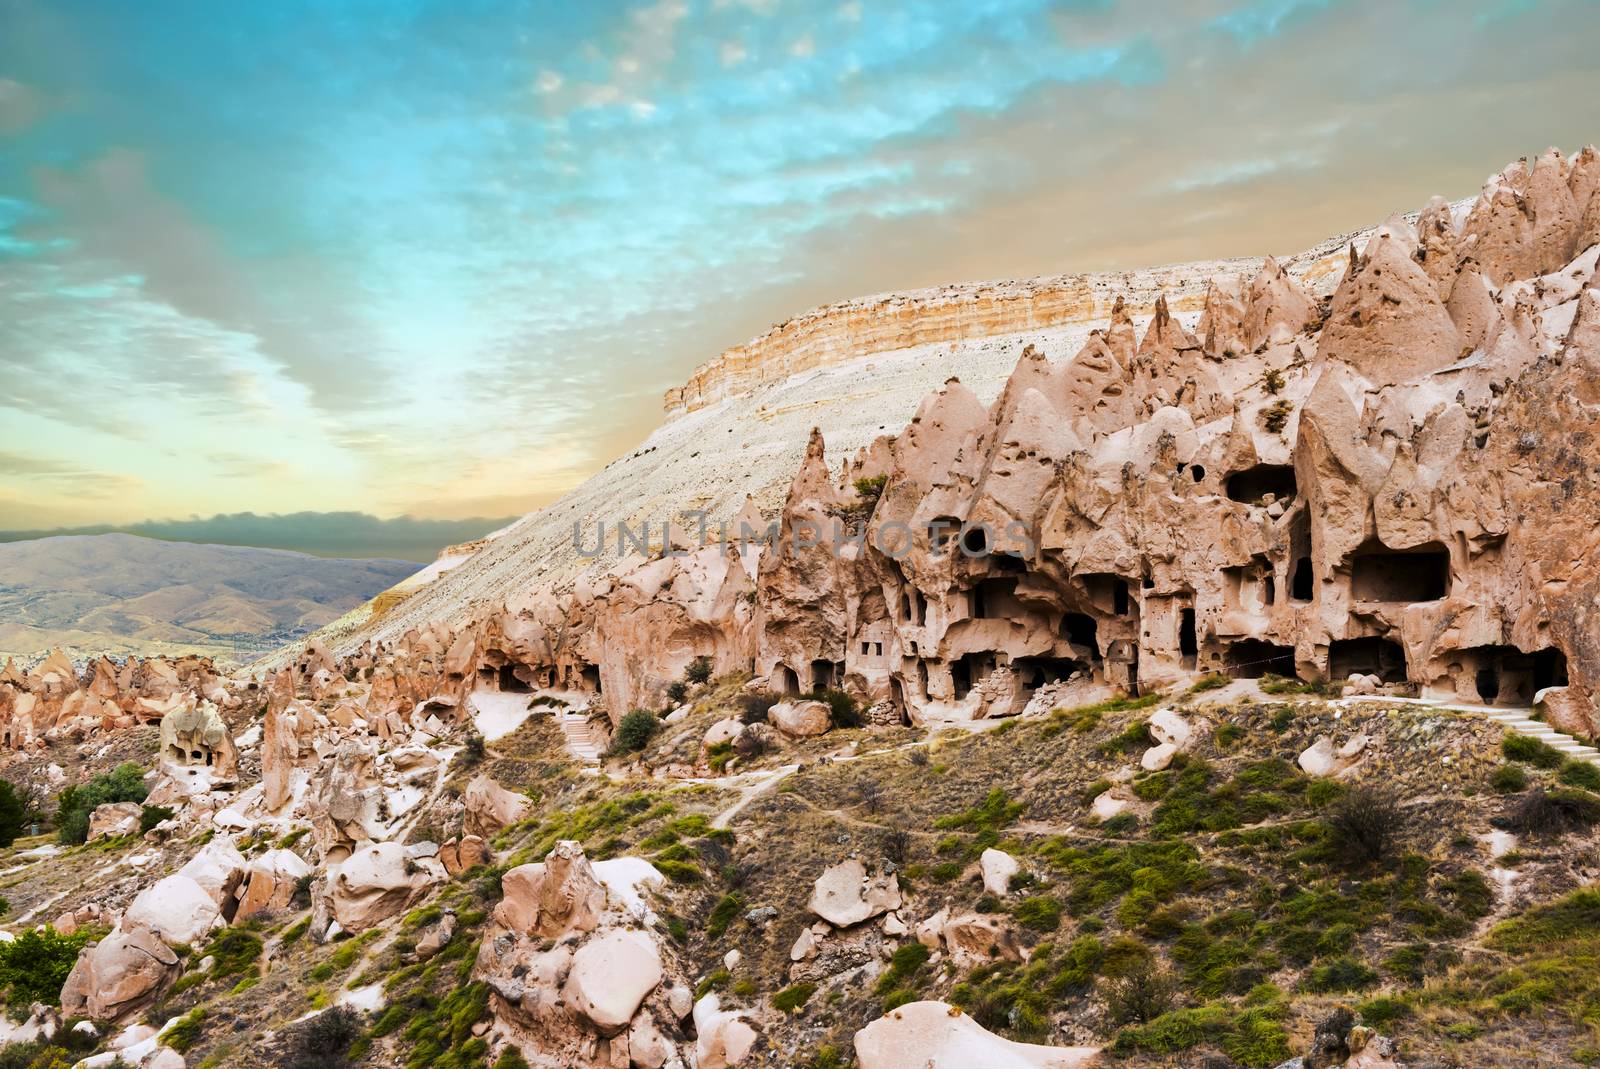 Caves in Zelve valley in Cappadocia in Turkey by fyletto